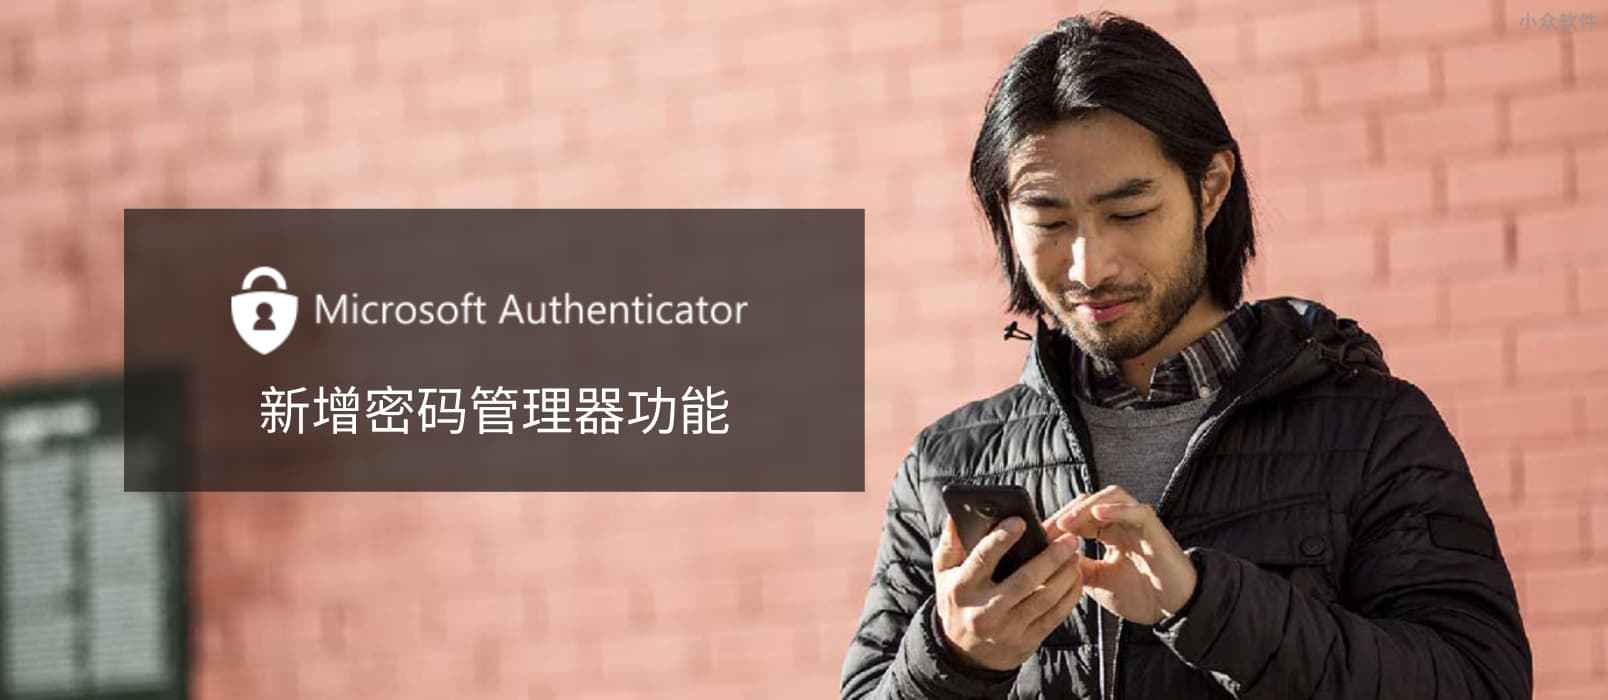 Microsoft Authenticator 密码管理器 - 从 Edge 同步密码，支持在 iPhone、Android 设备及 Chrome 中自动填写密码